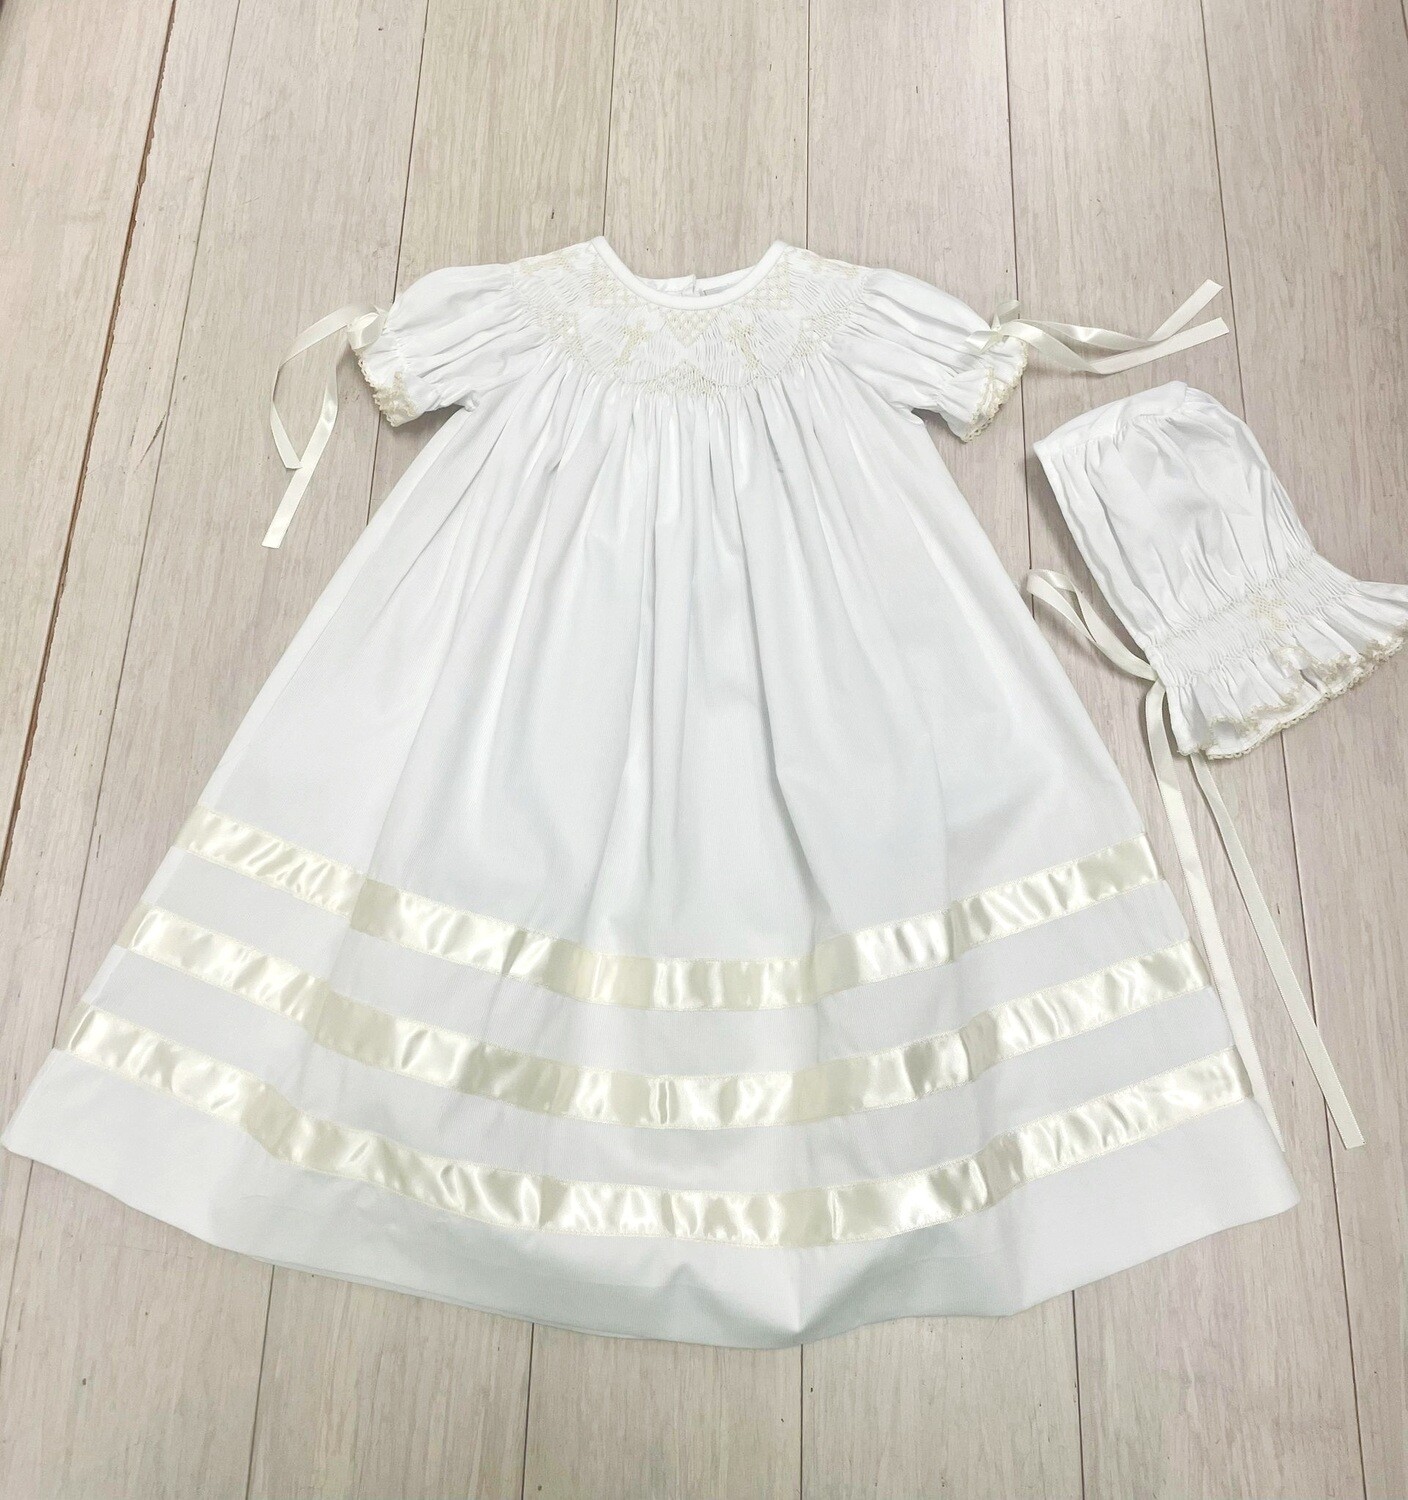 Beautiful White Smocked Ecru Cross Daygown &Bonnet